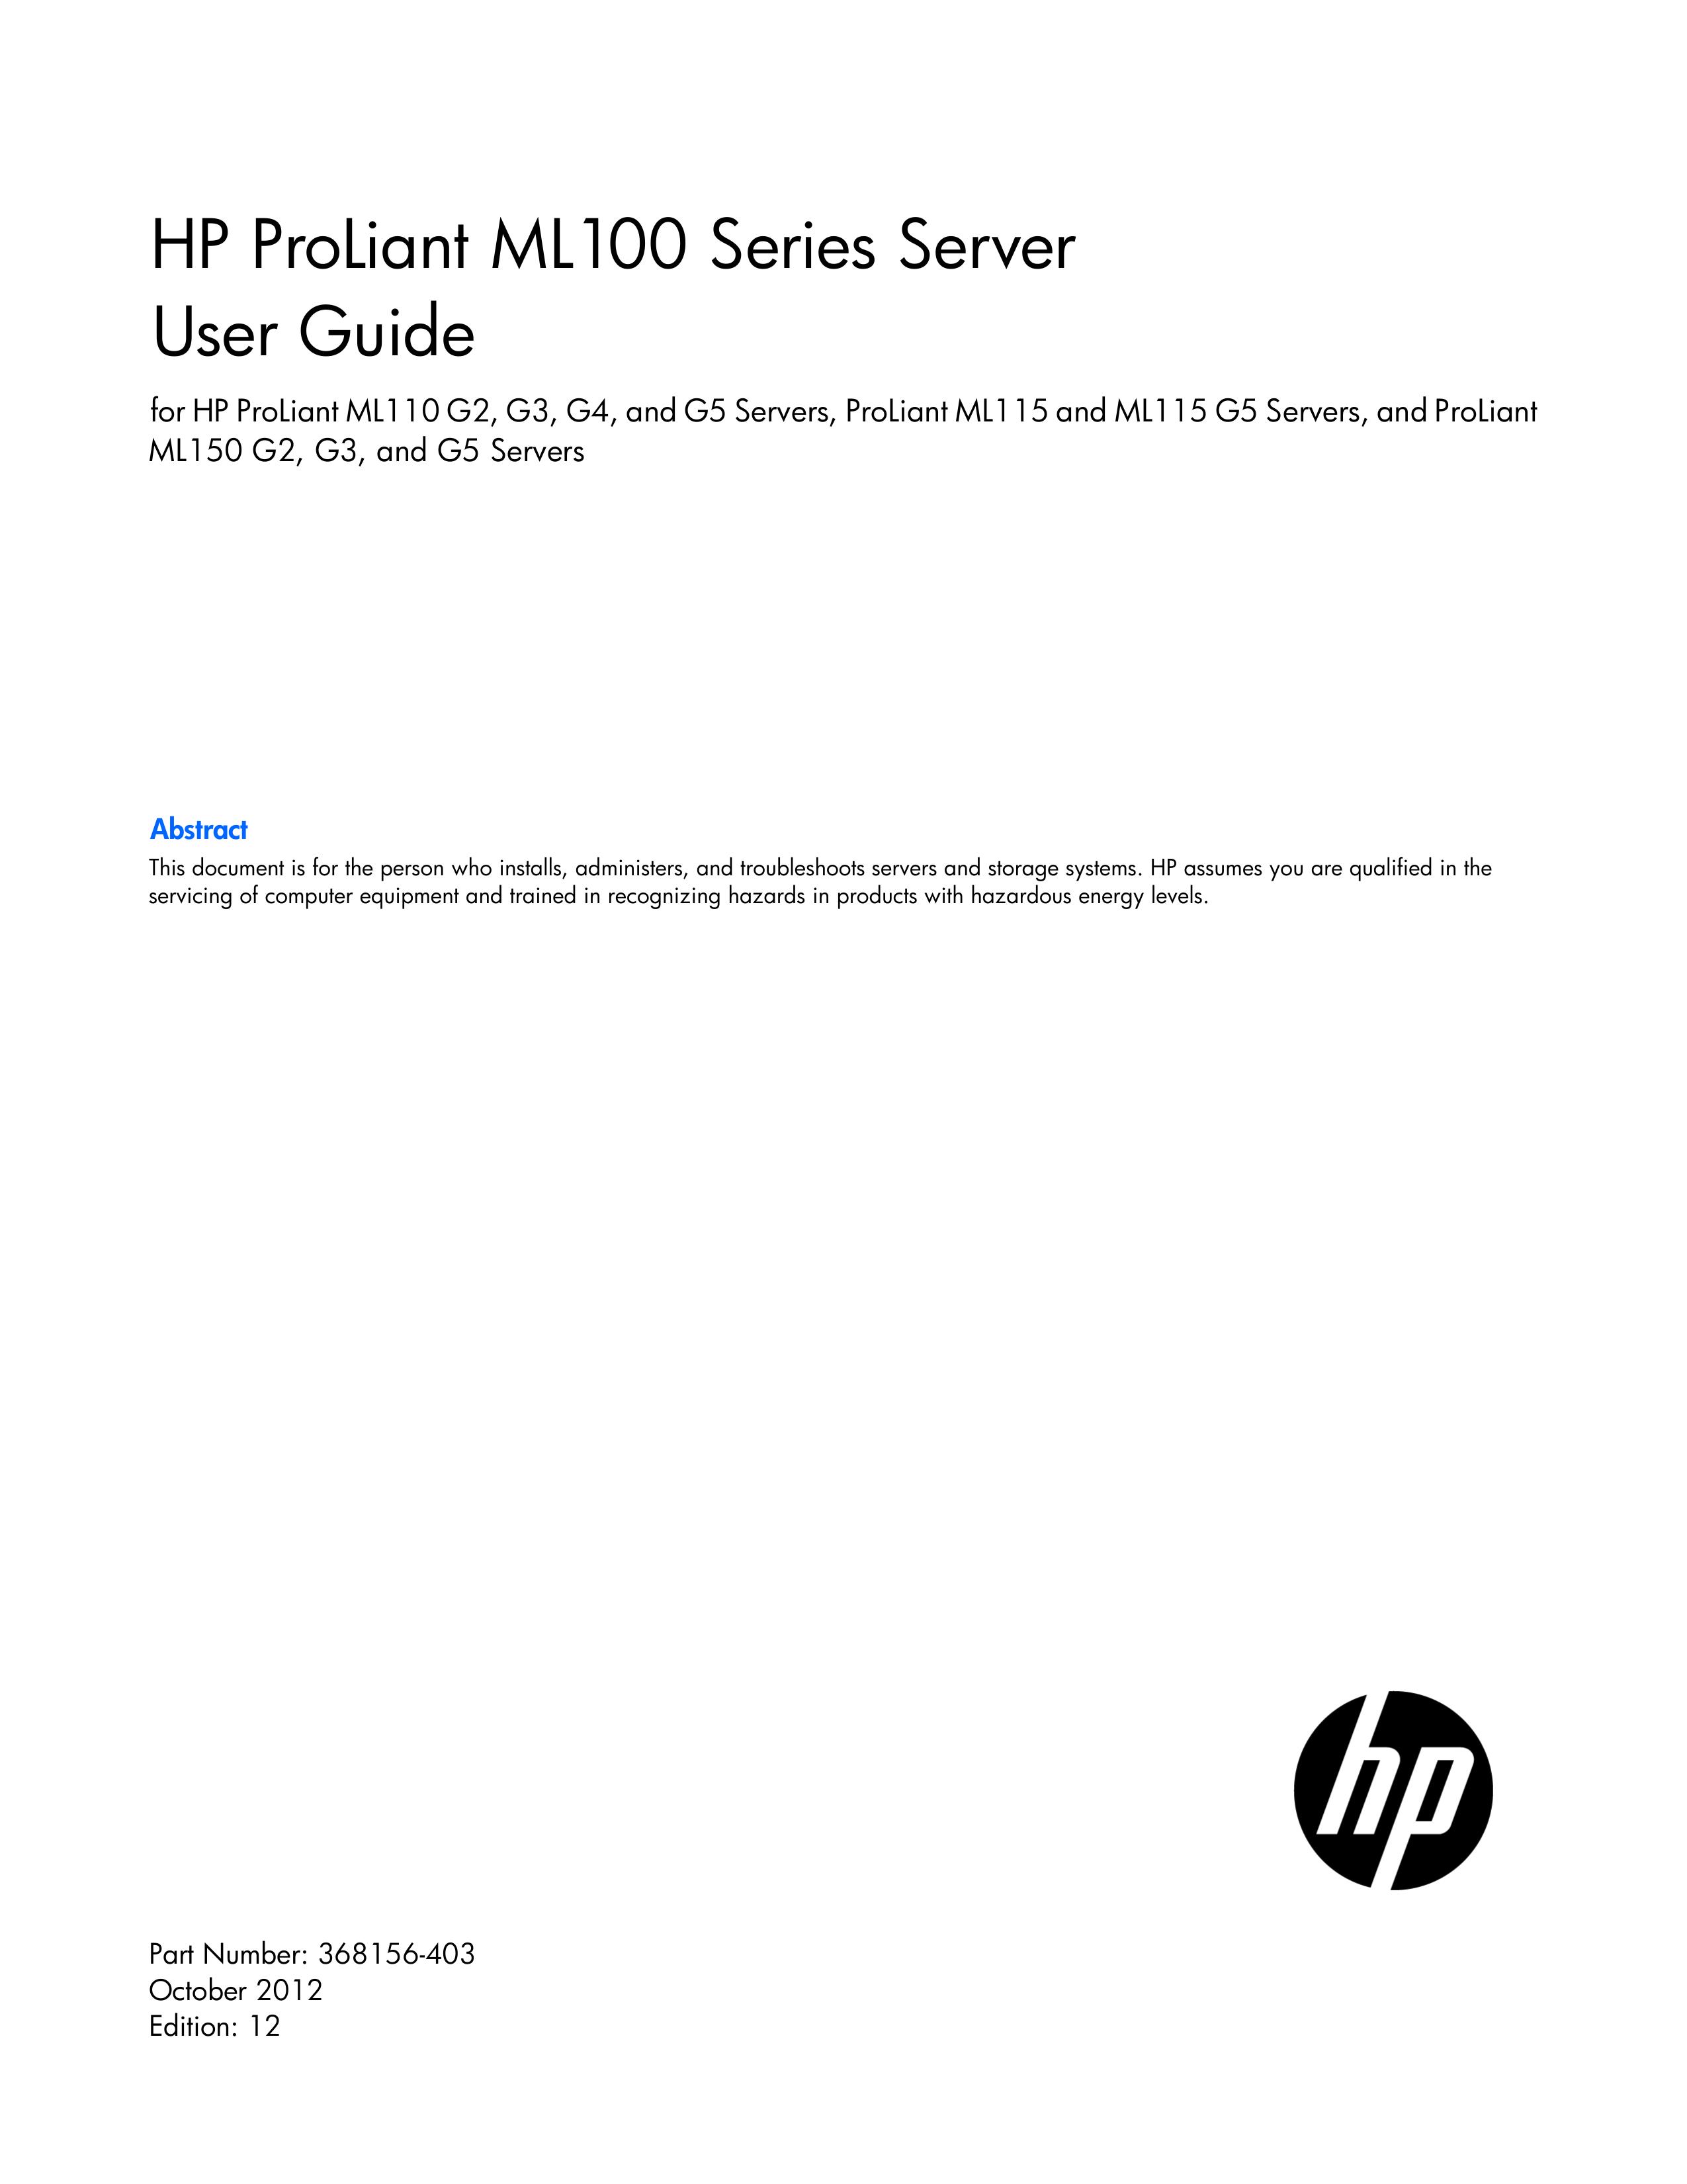 HP (Hewlett-Packard) ML100 Security Camera User Manual